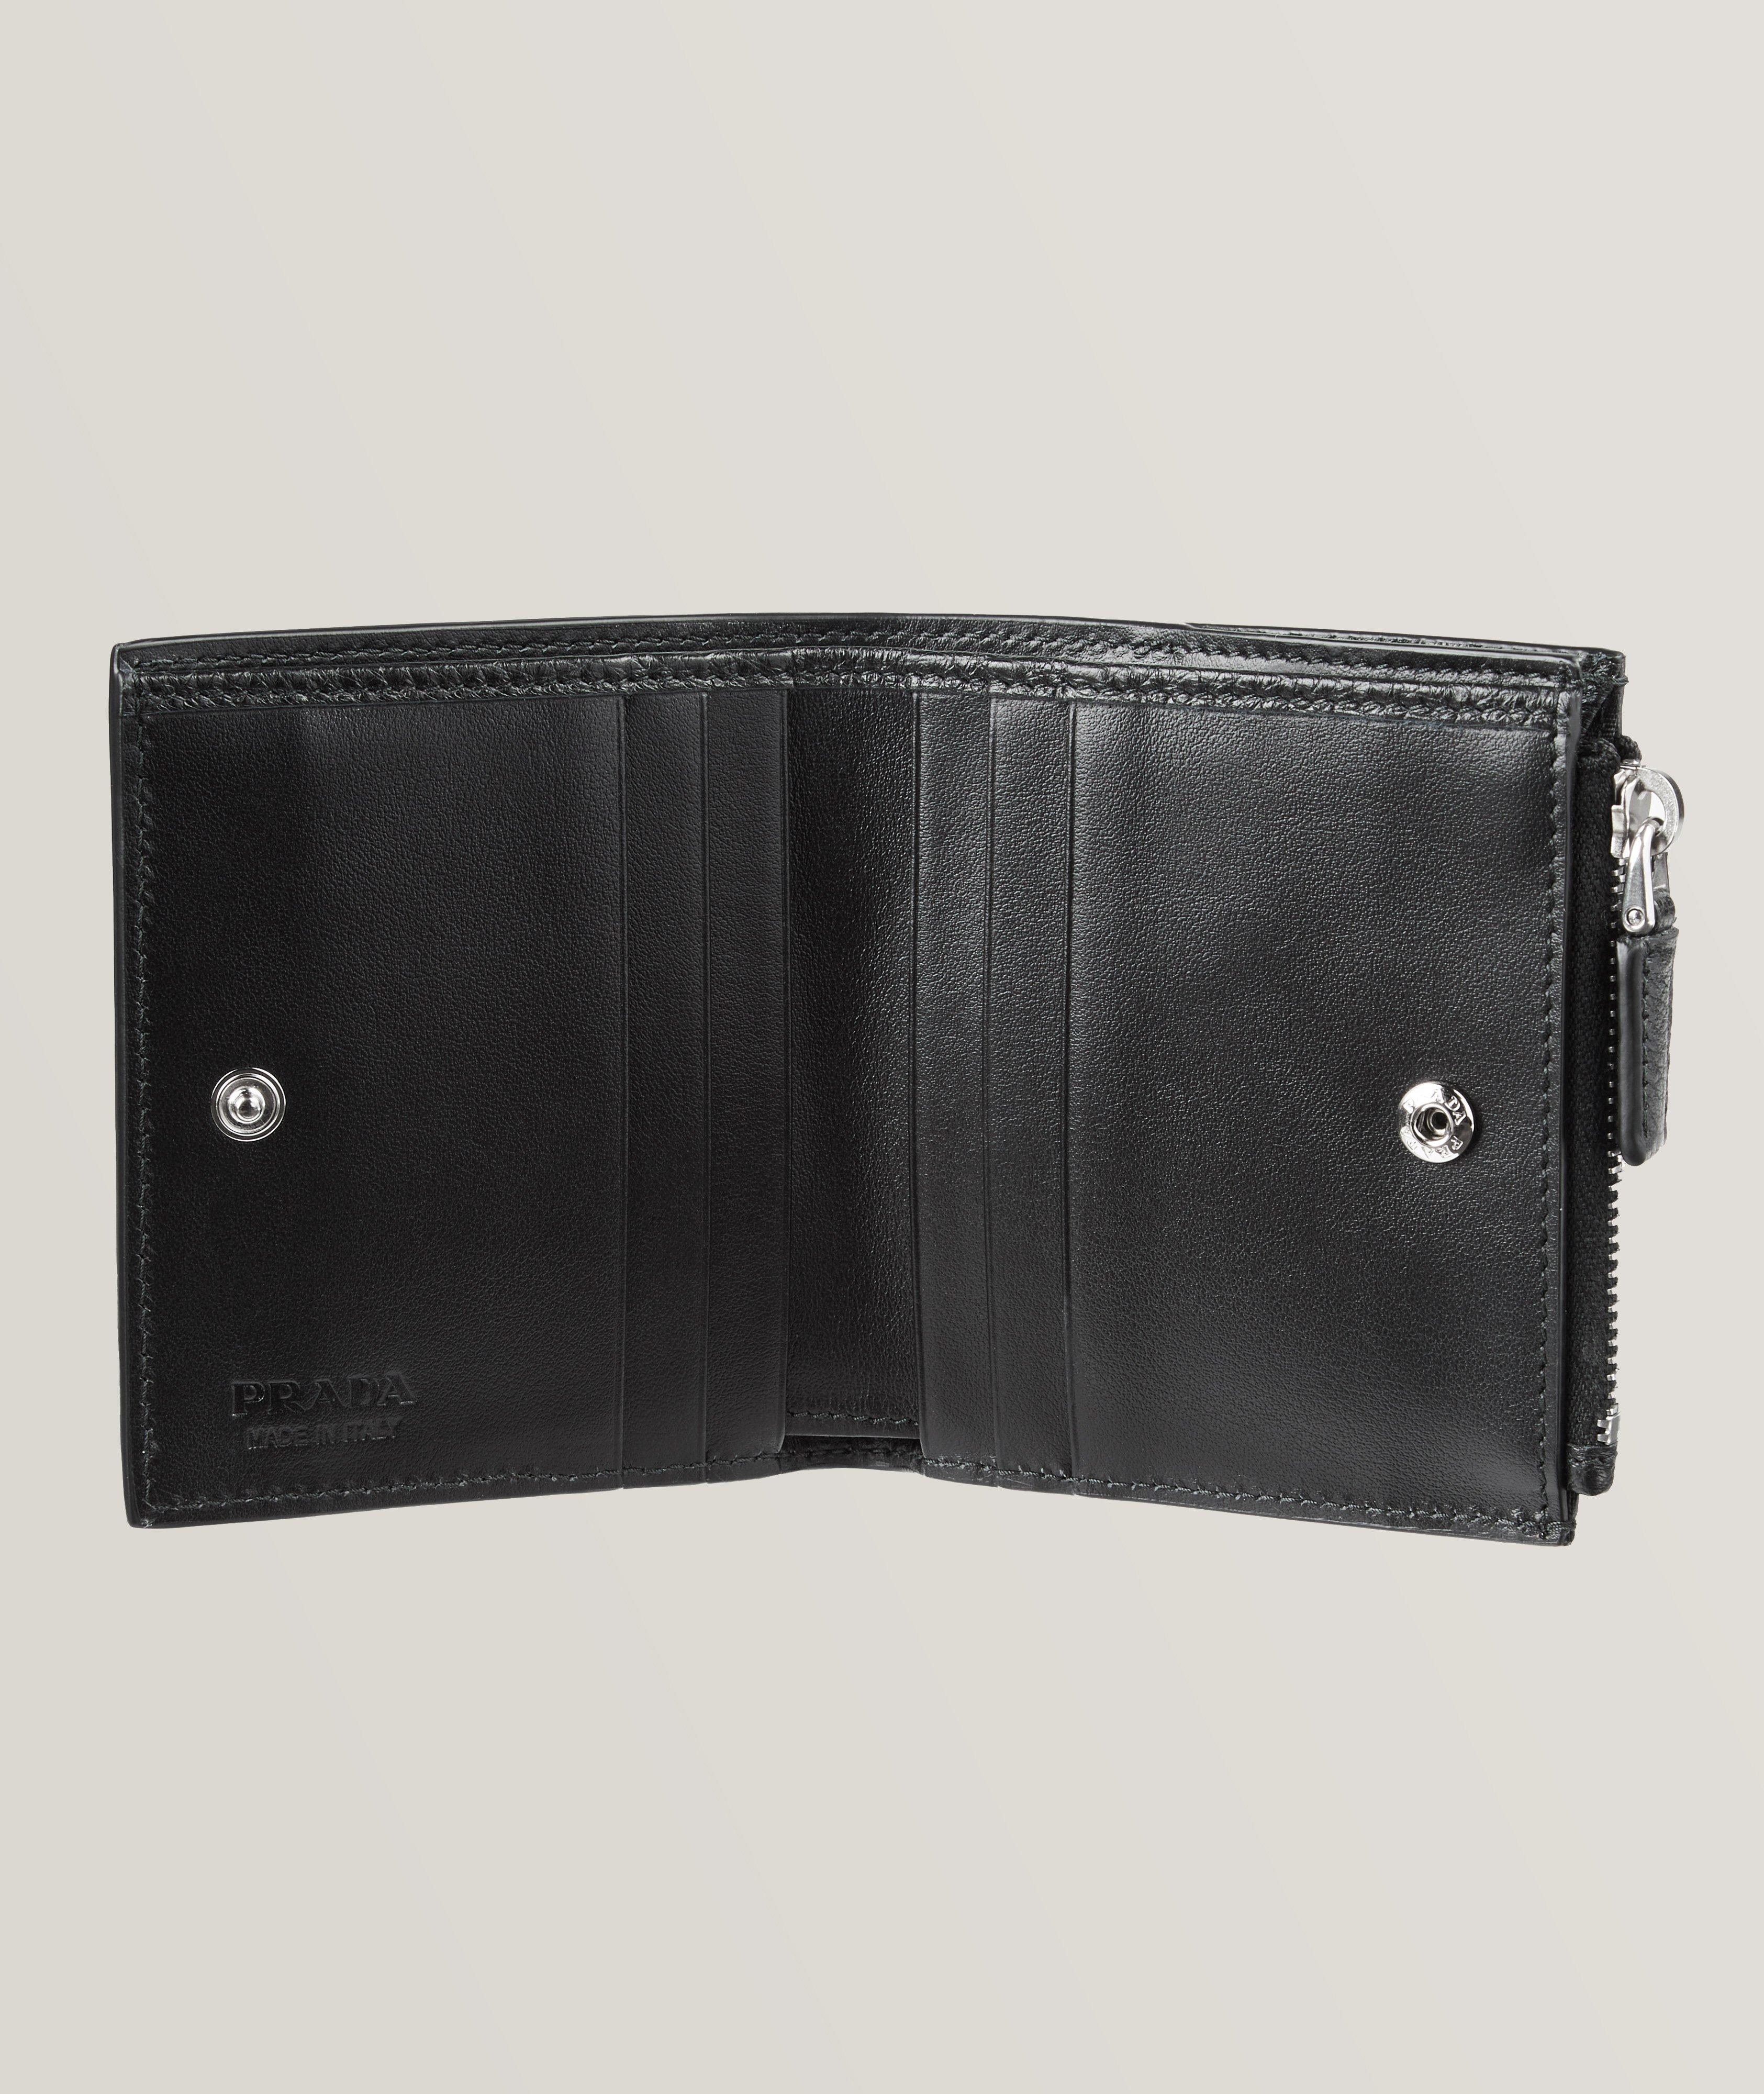 Triangolo Daino Leather Zip Wallet image 1